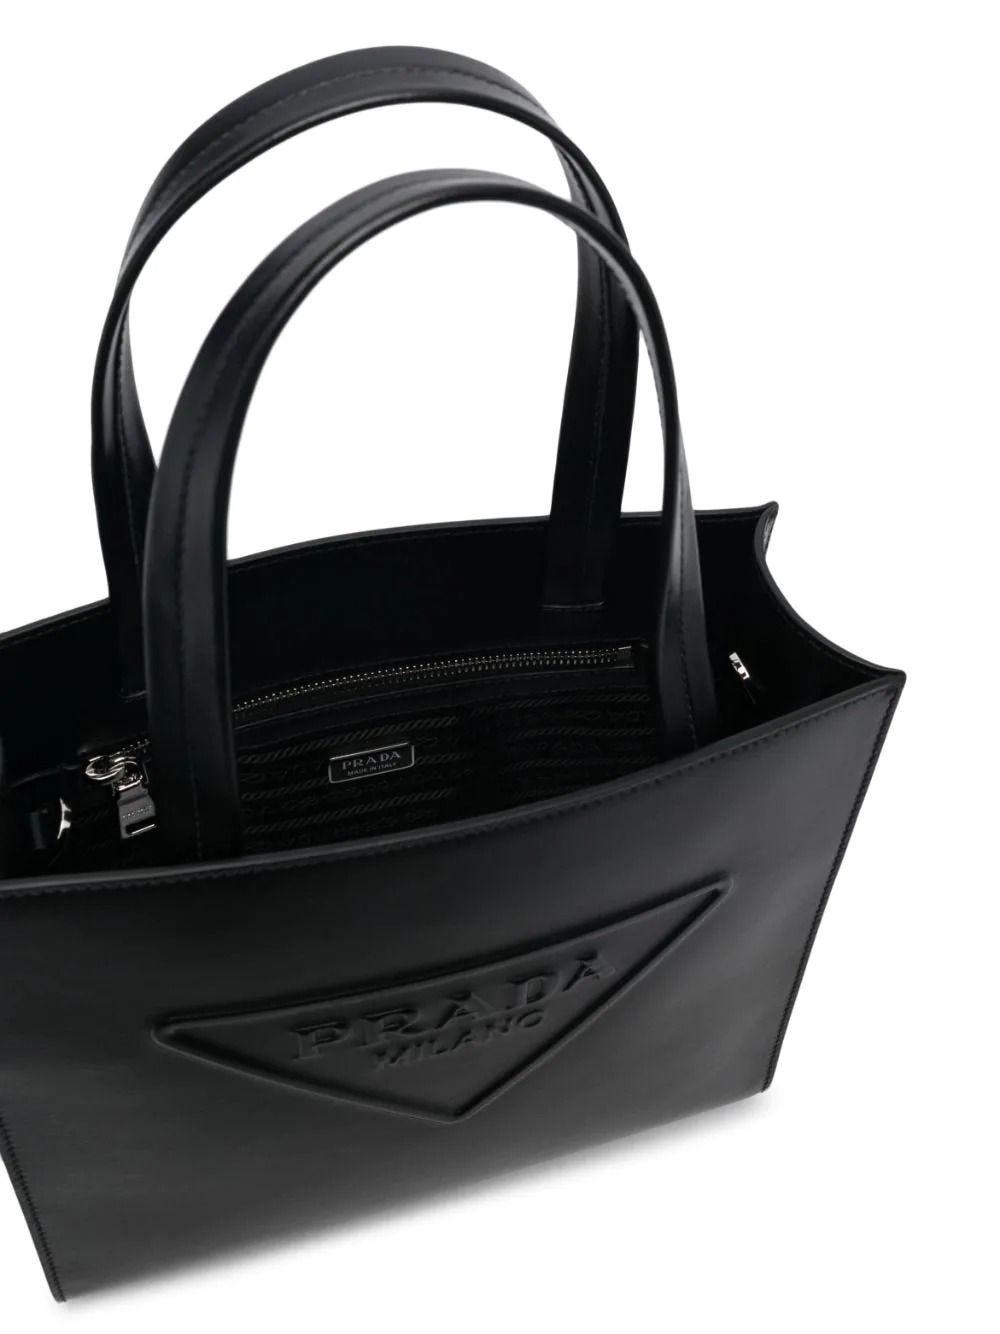 Prada - Men's Handbag Tote - Black - Leather